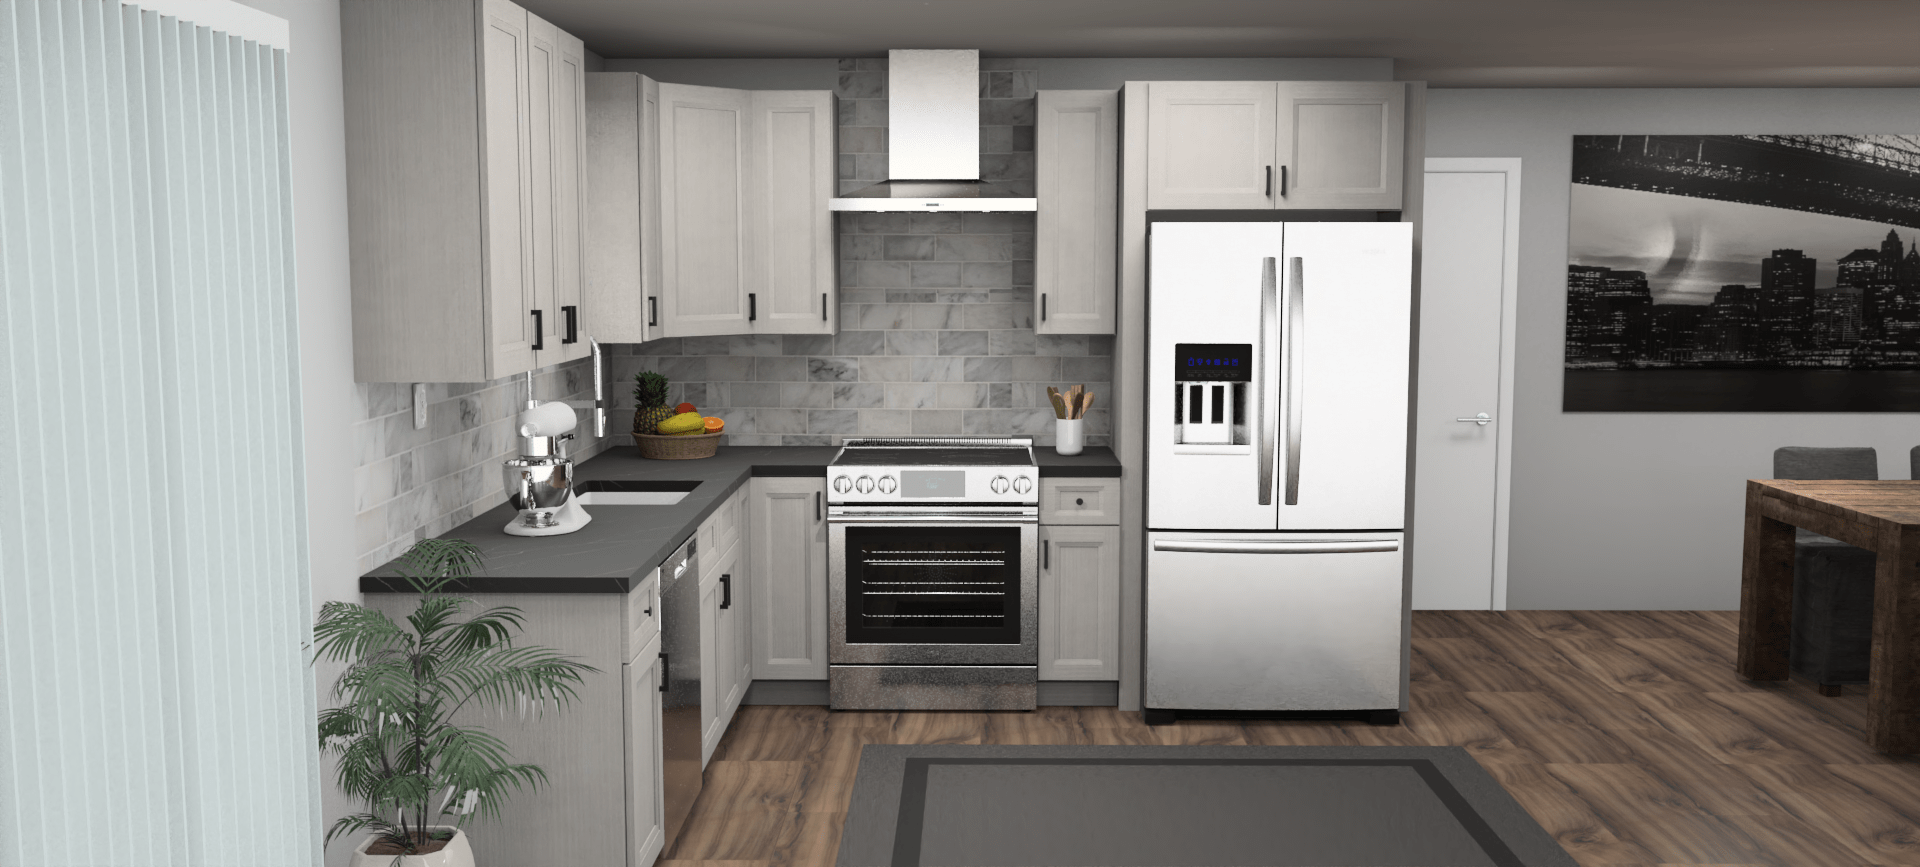 Fabuwood Allure Onyx Horizon 9 x 10 L Shaped Kitchen Front Layout Photo